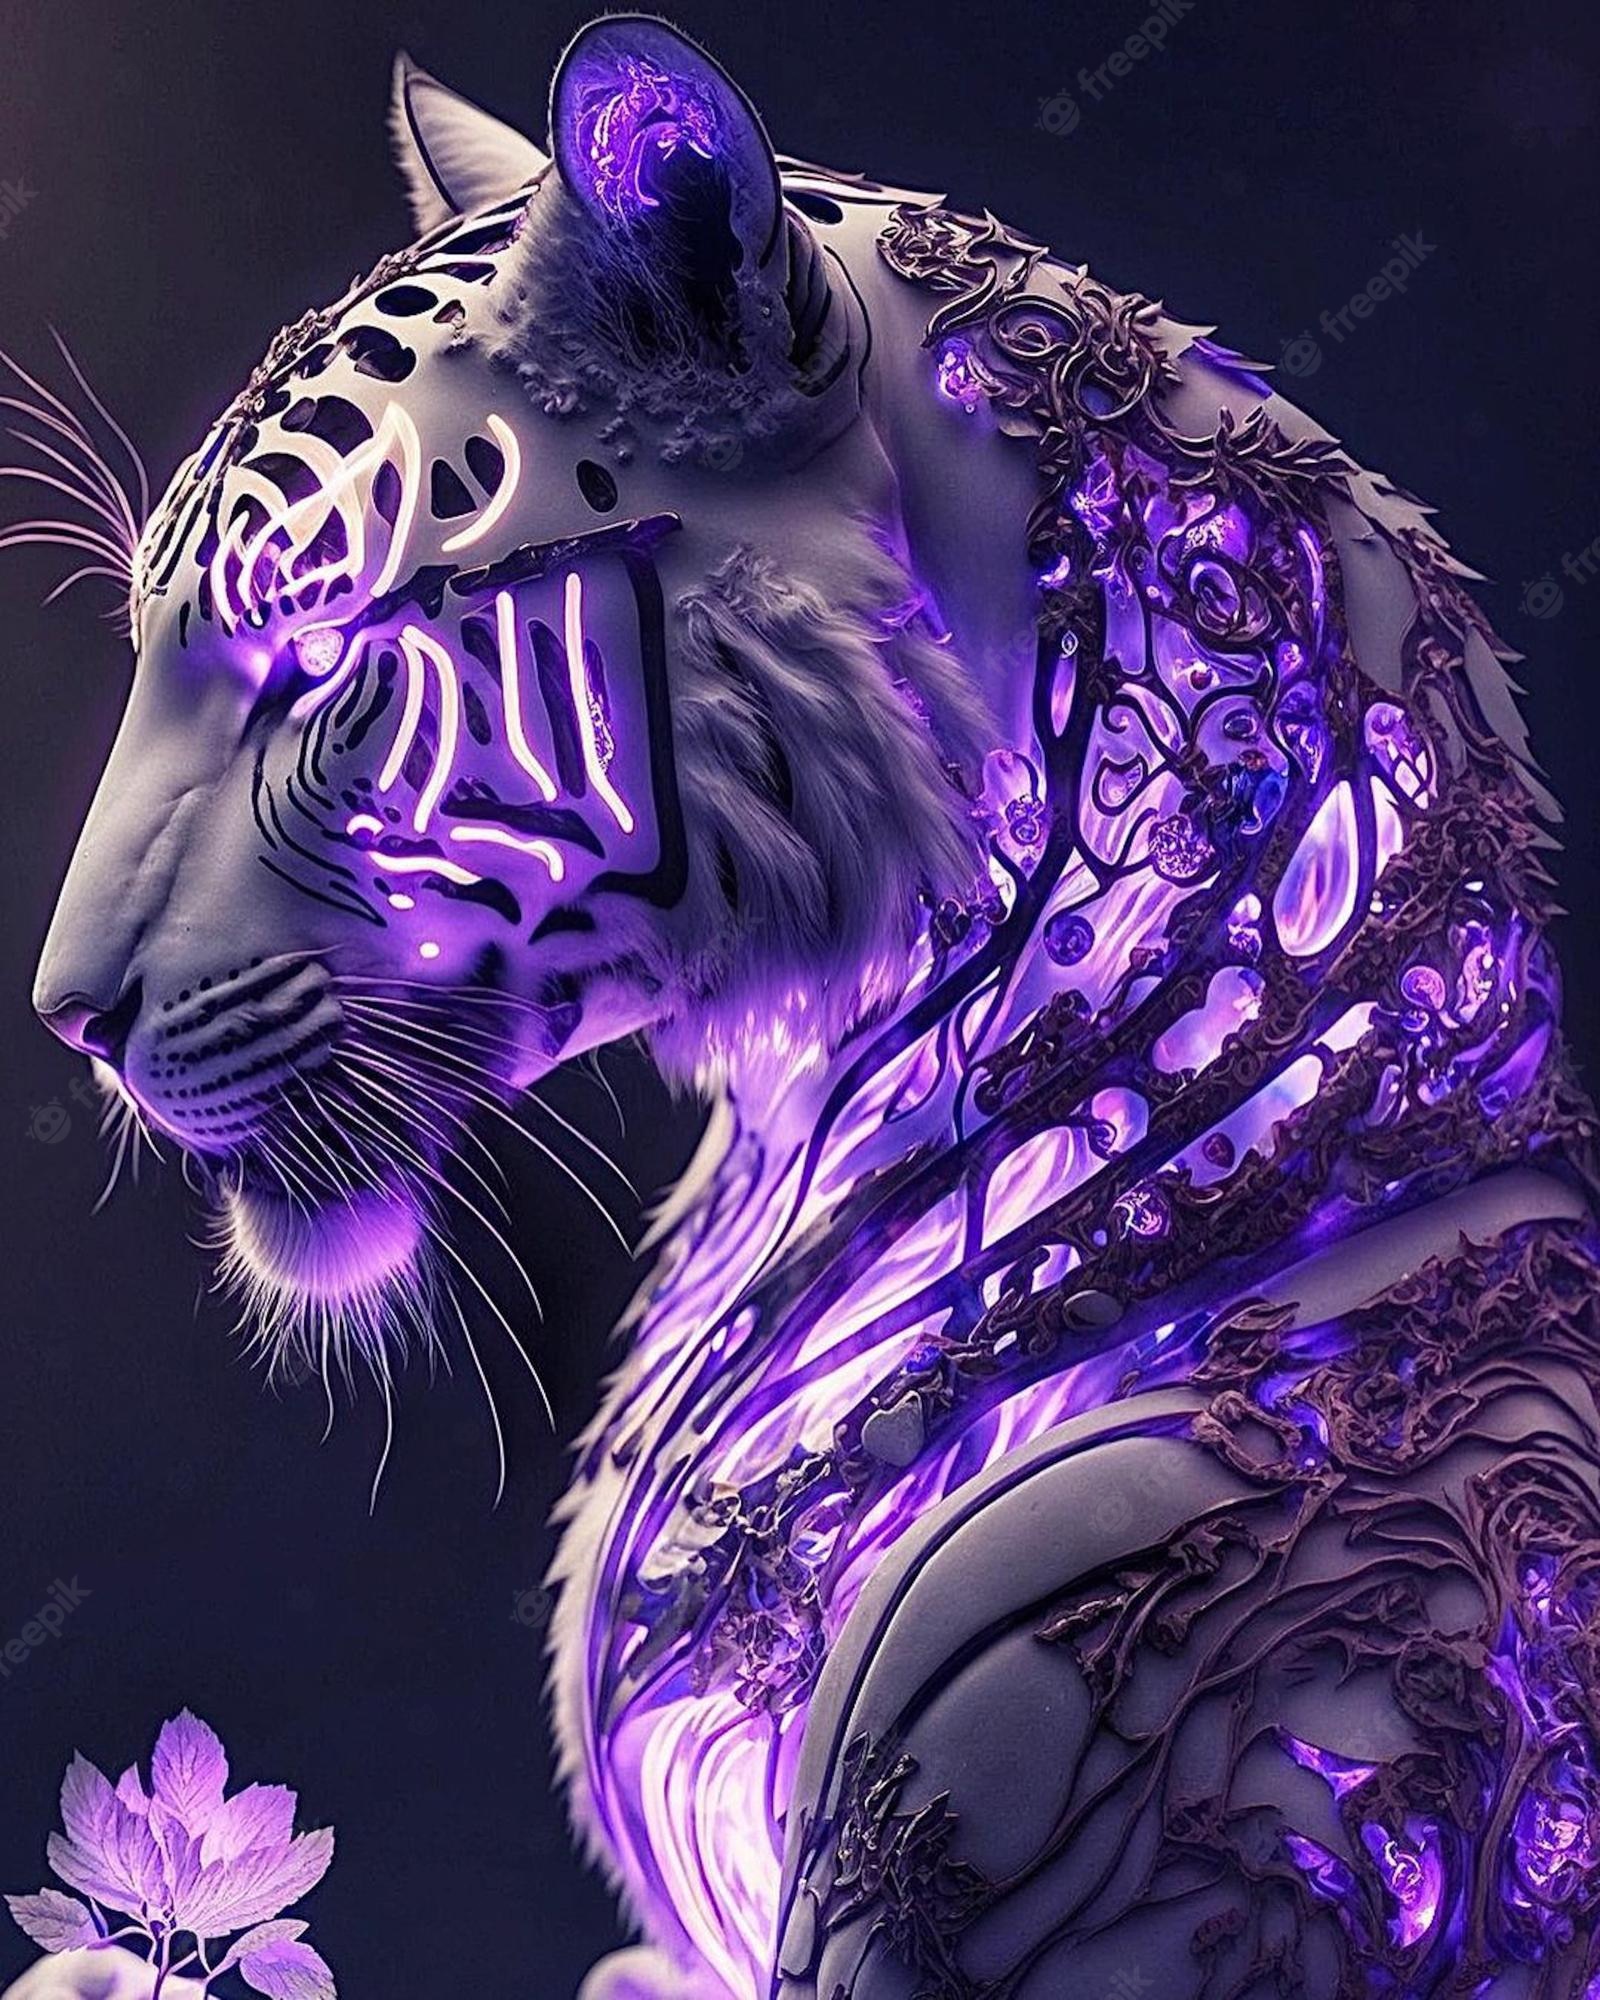 Premium Photo. Purple tiger wallpaper that will make you smile